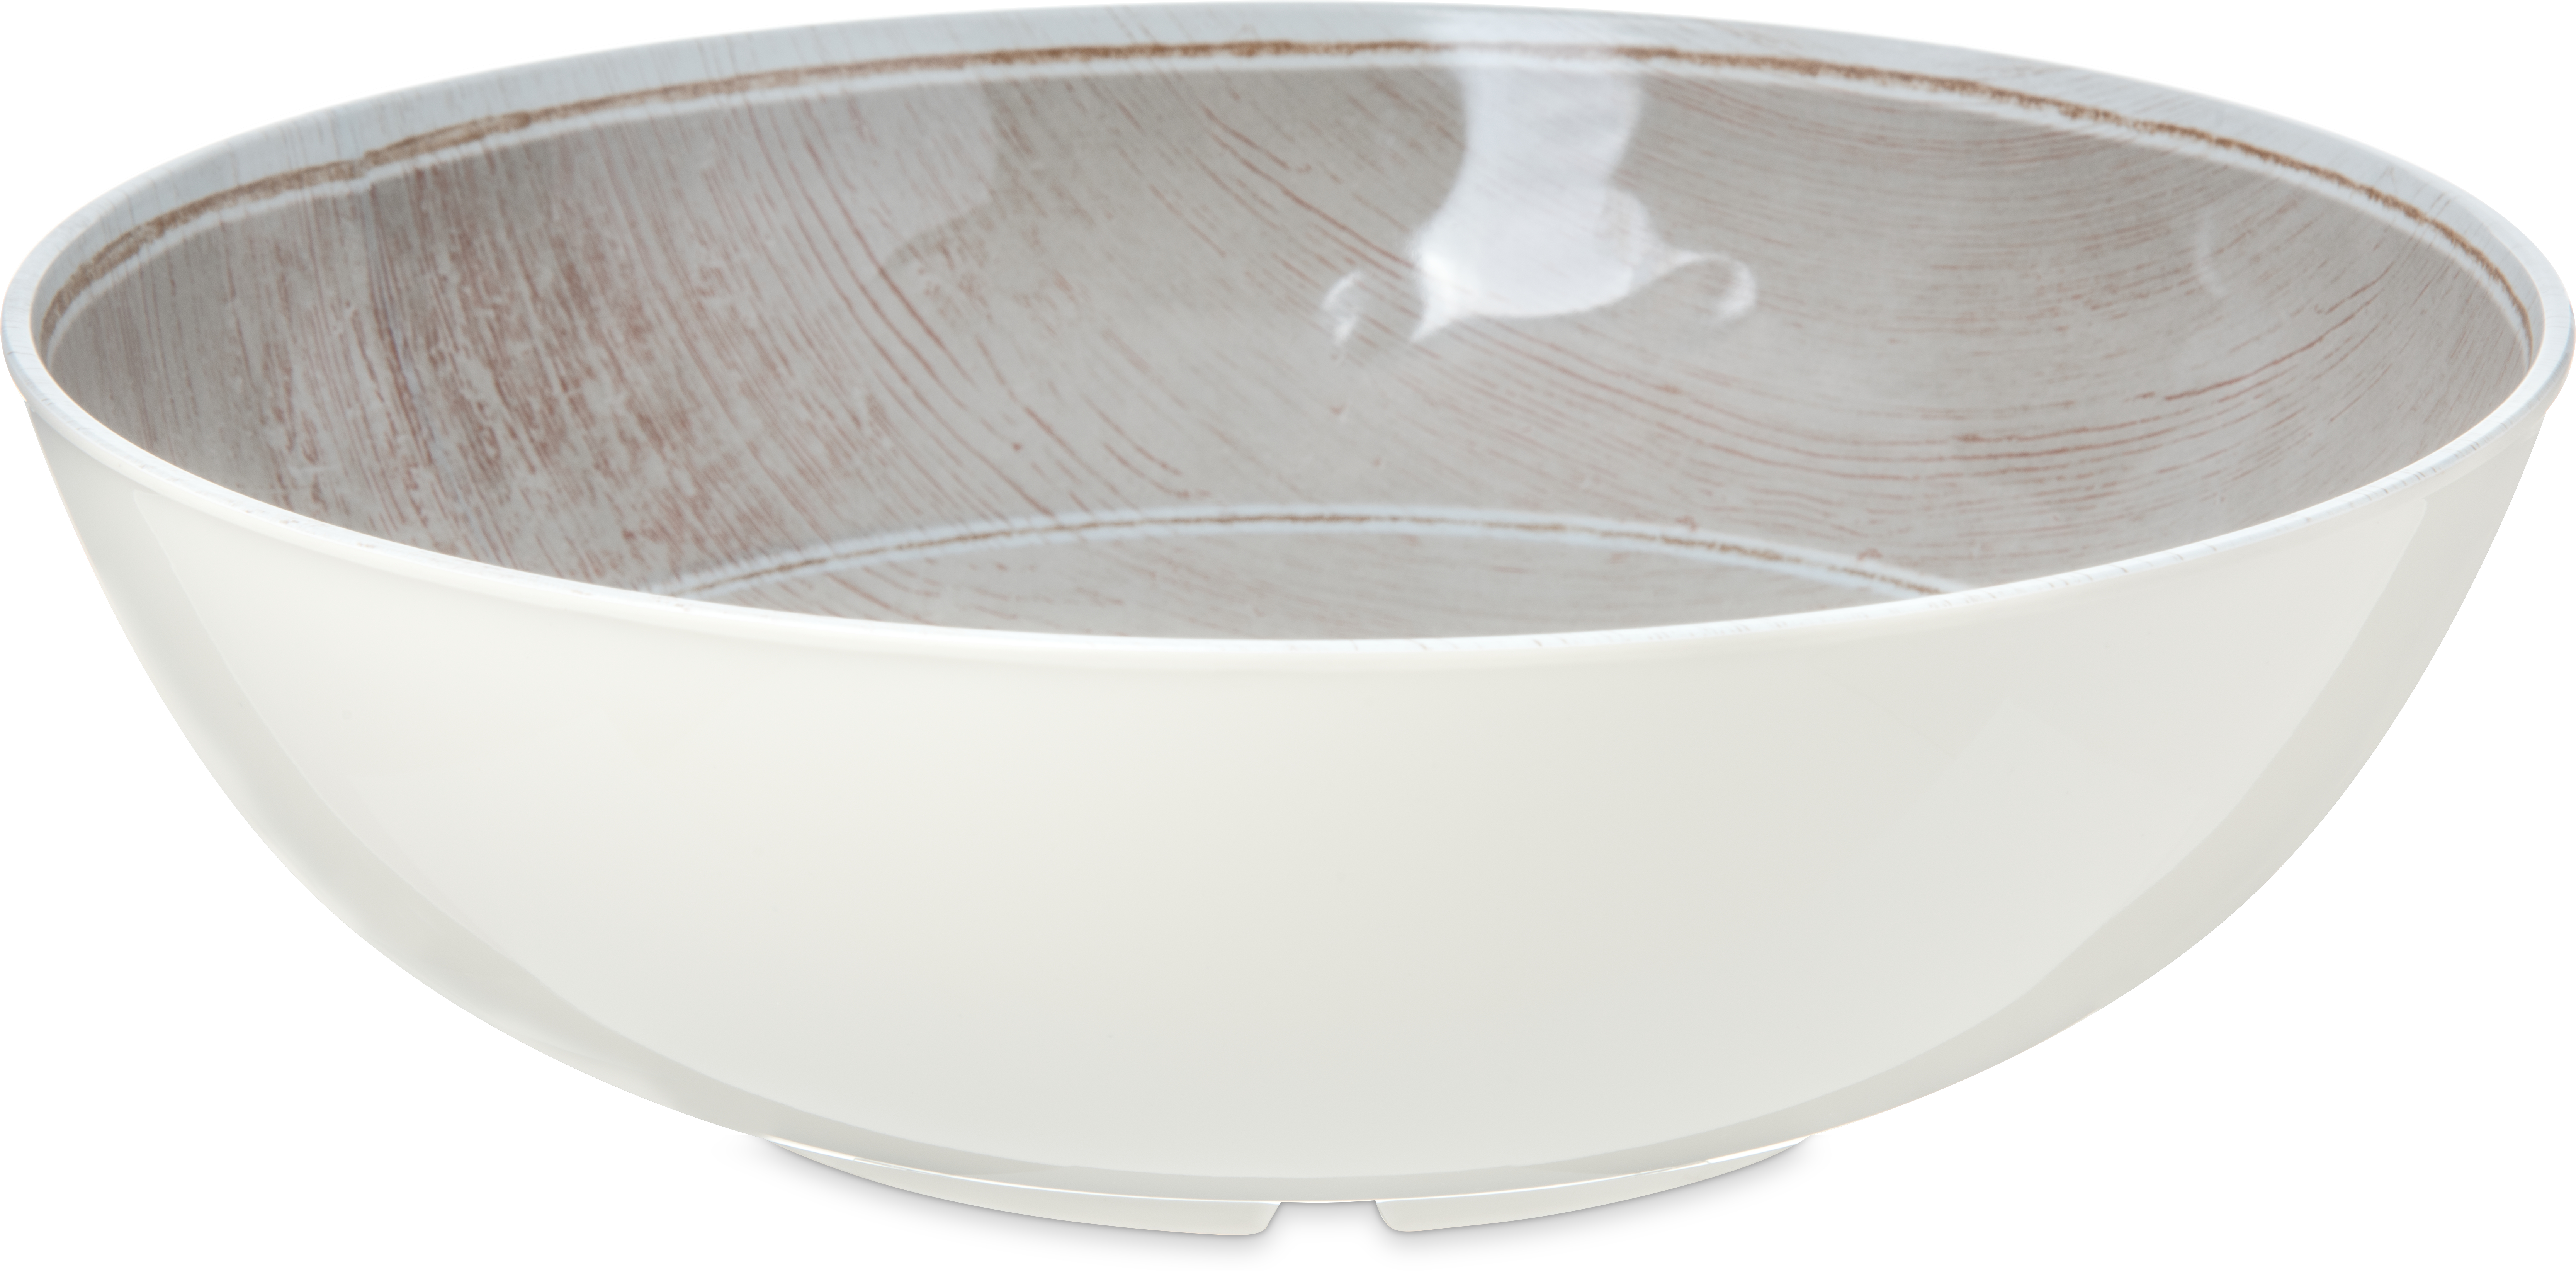 Melamine Large Bowl 5.2 Quart - Adobe